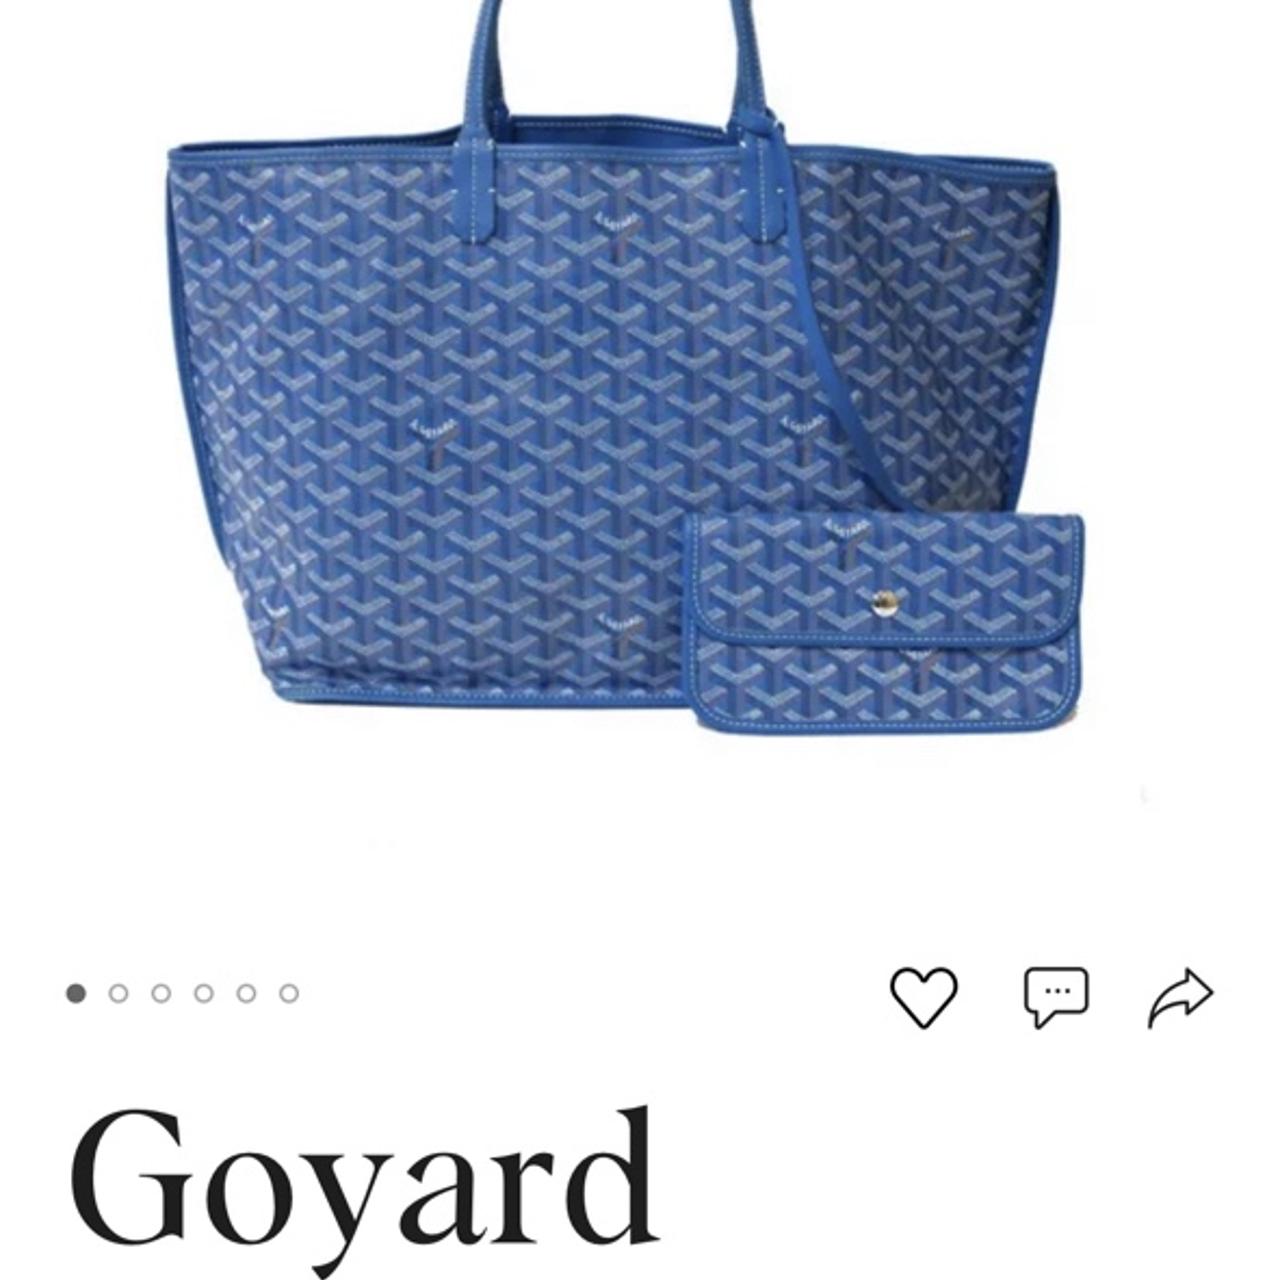 Goyard Women's Tote Bags